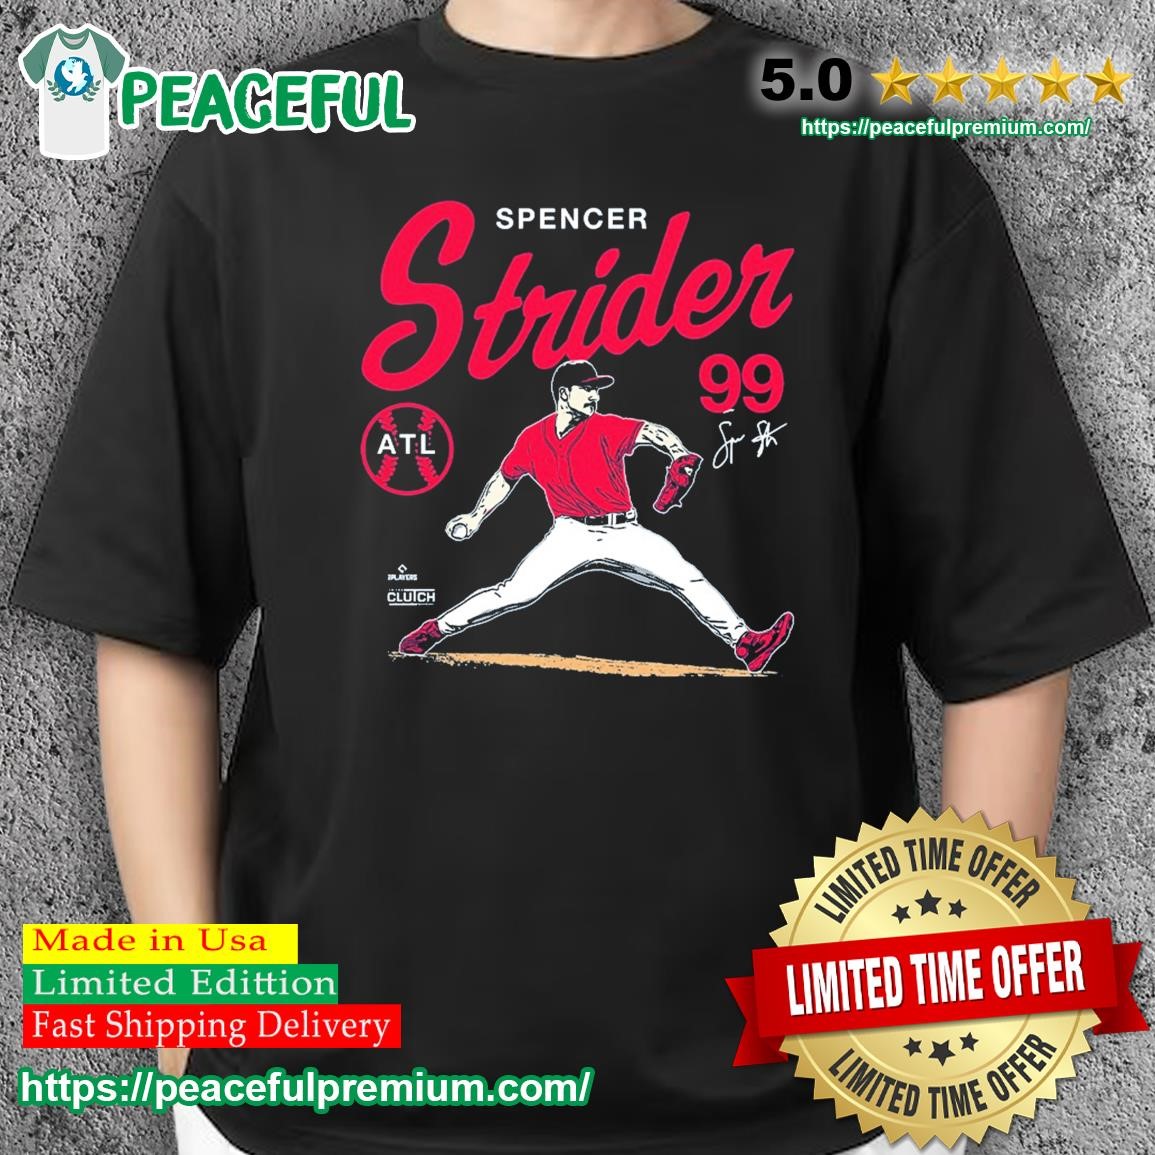 Spencer Strider ATL #99 Atlanta Braves Signatures shirt, hoodie